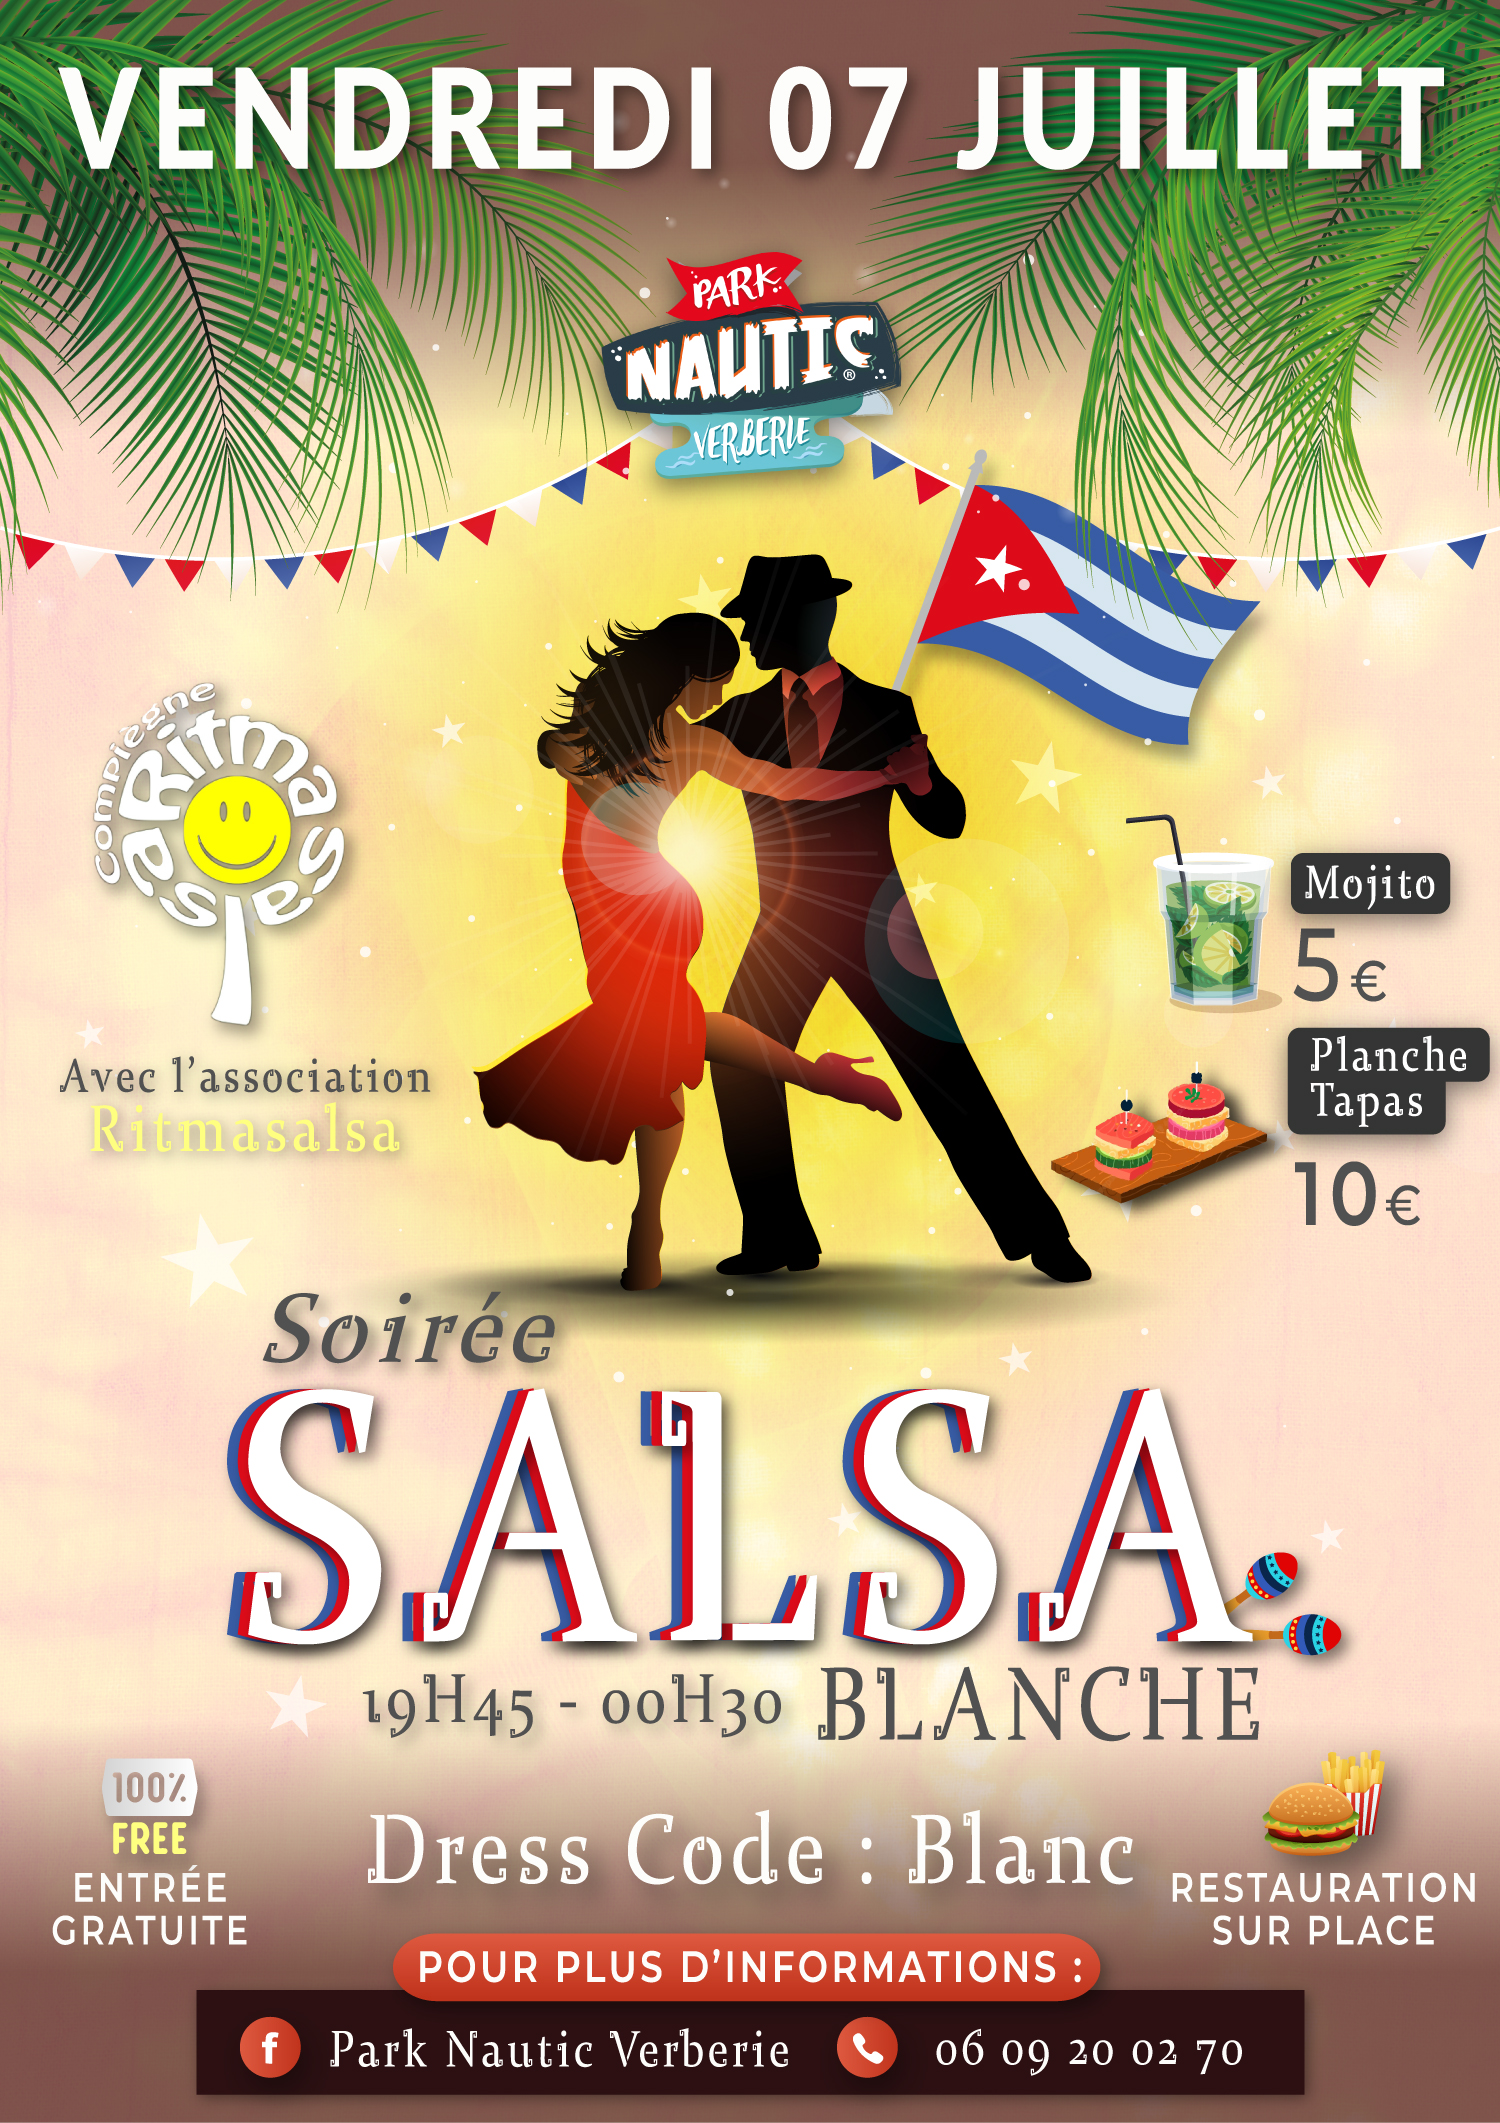 Soirée Blanche Salsa cubaine